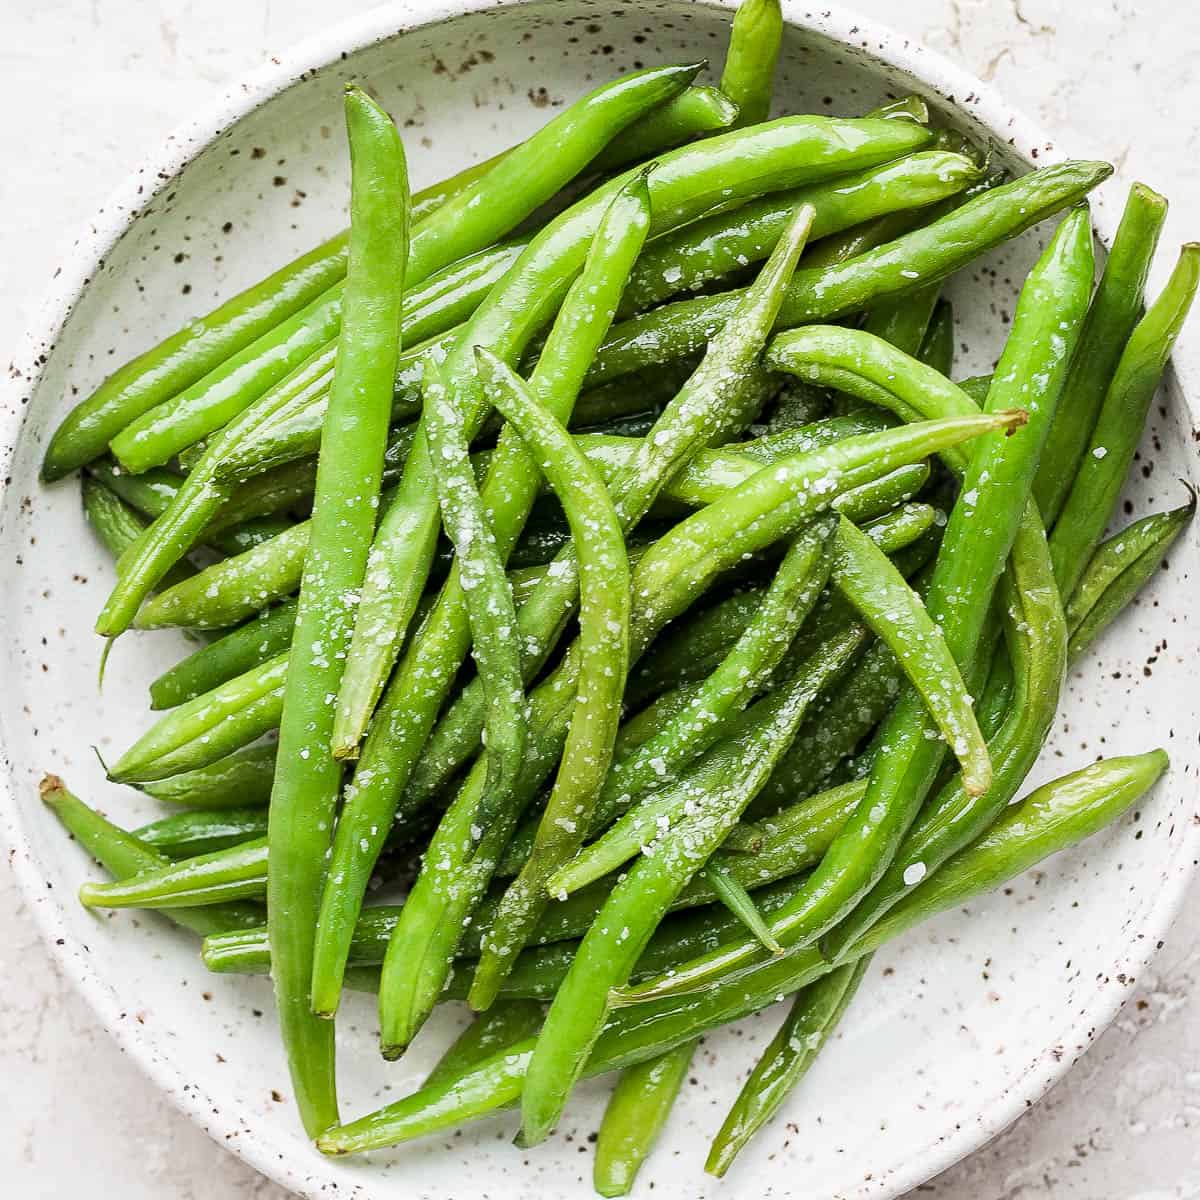 Smoked green beans recipe.